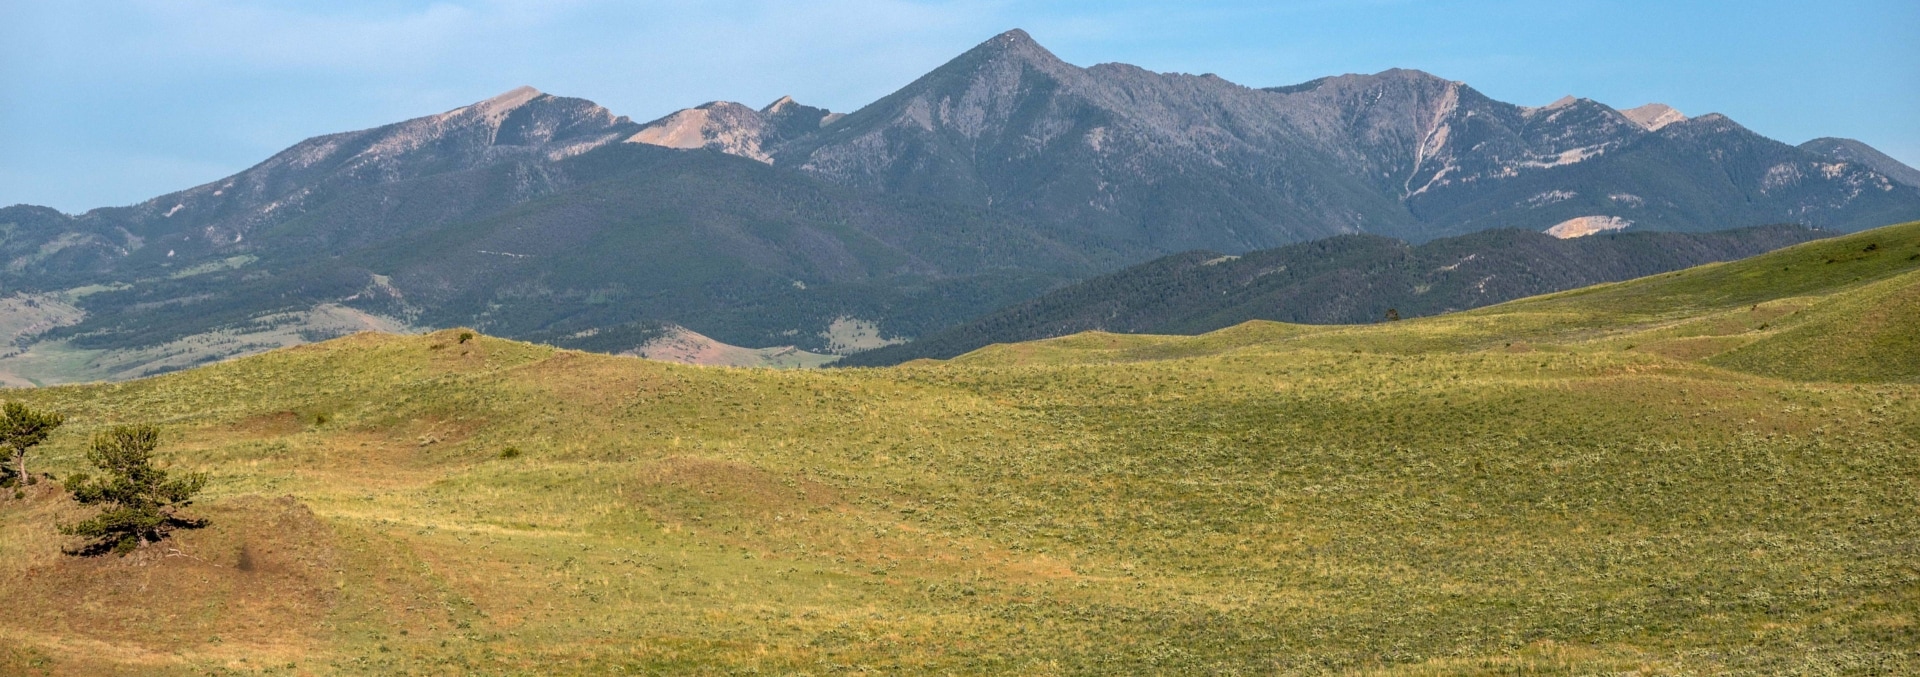 montana land for sale bozeman pass ranch tract 5